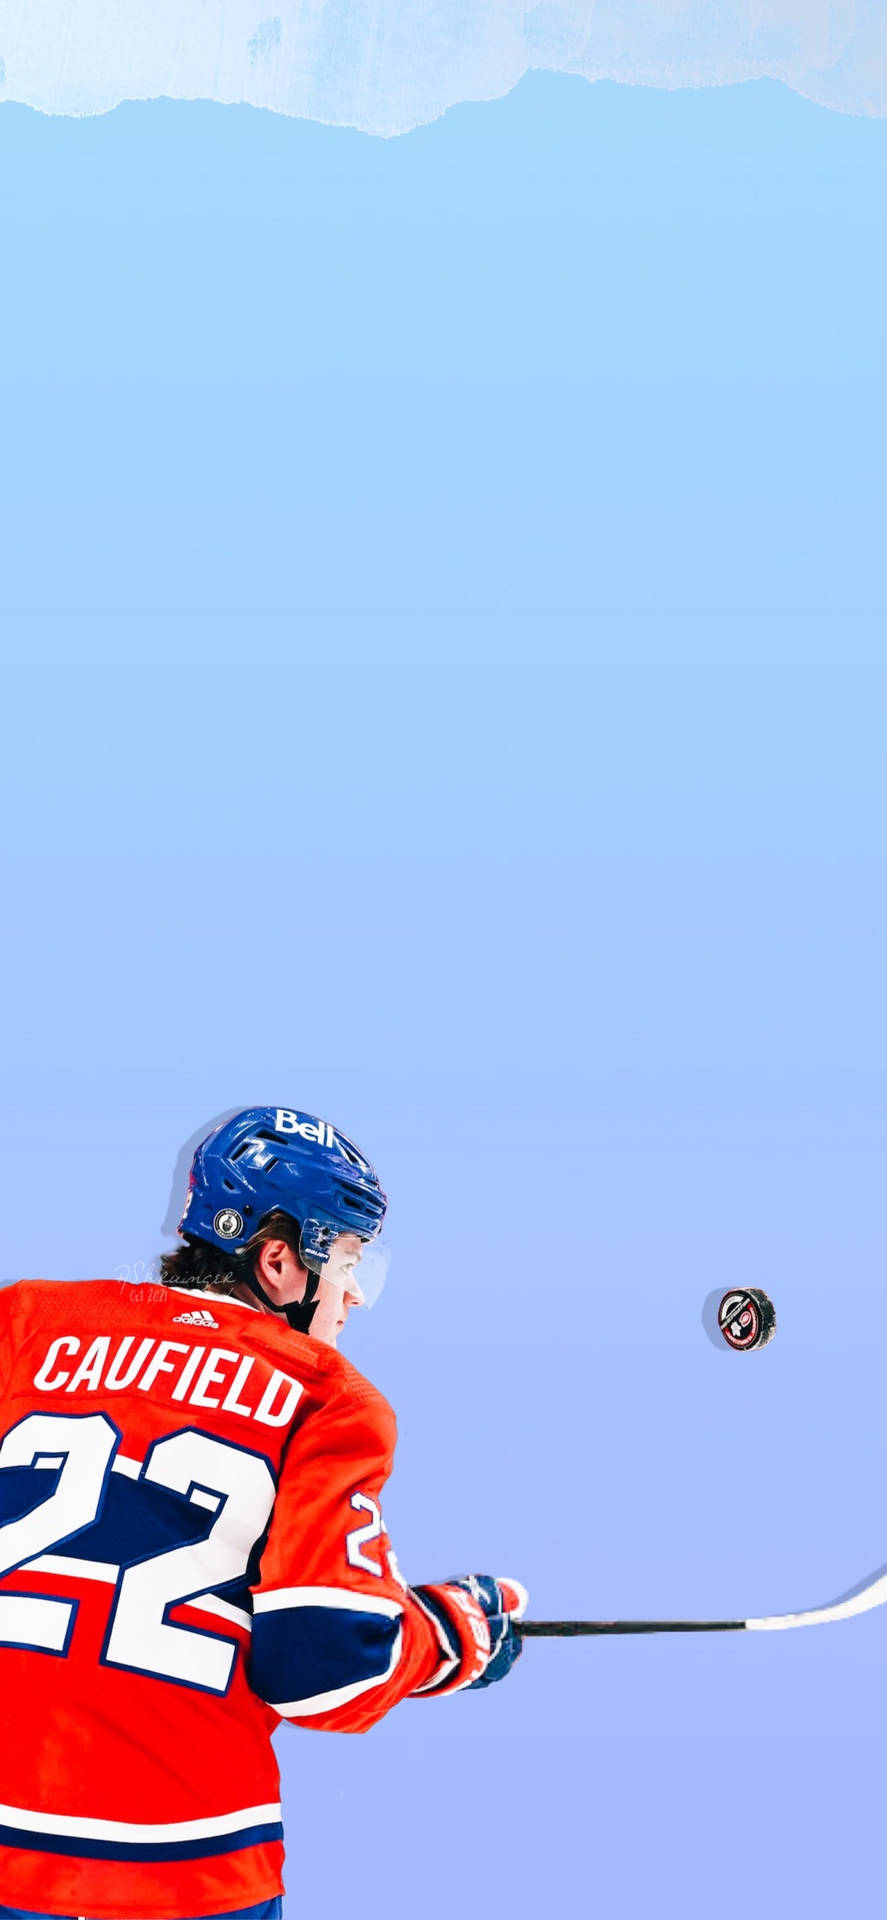 Cole Caufield American Ice Hockey Player Wallpaper